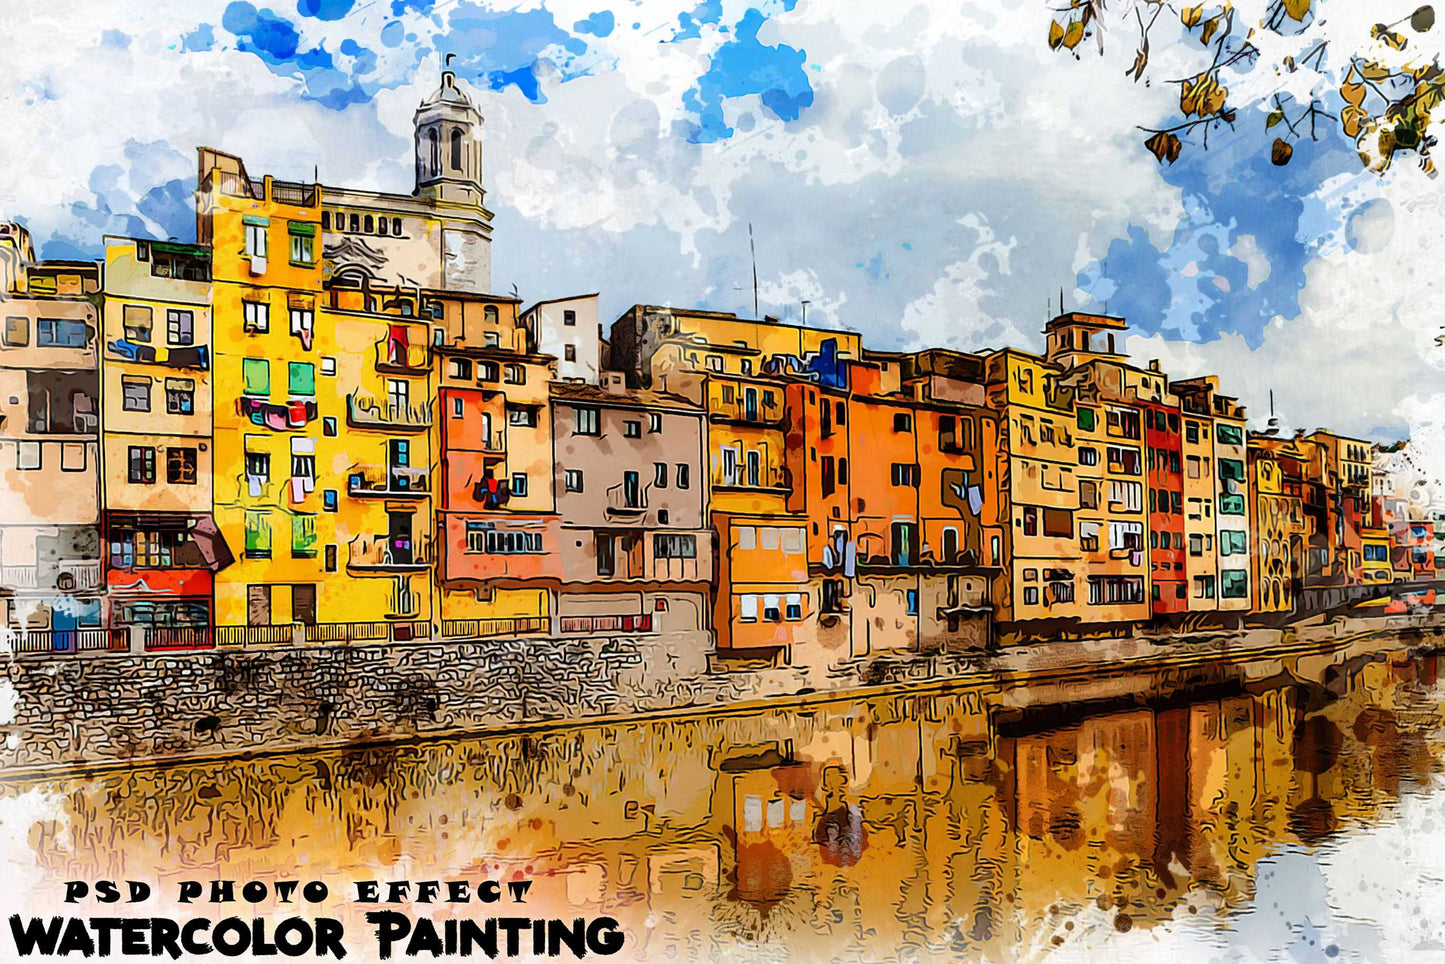 14 Ultramodern Painting Photoshop Add-Ons Bundle - Photoboto